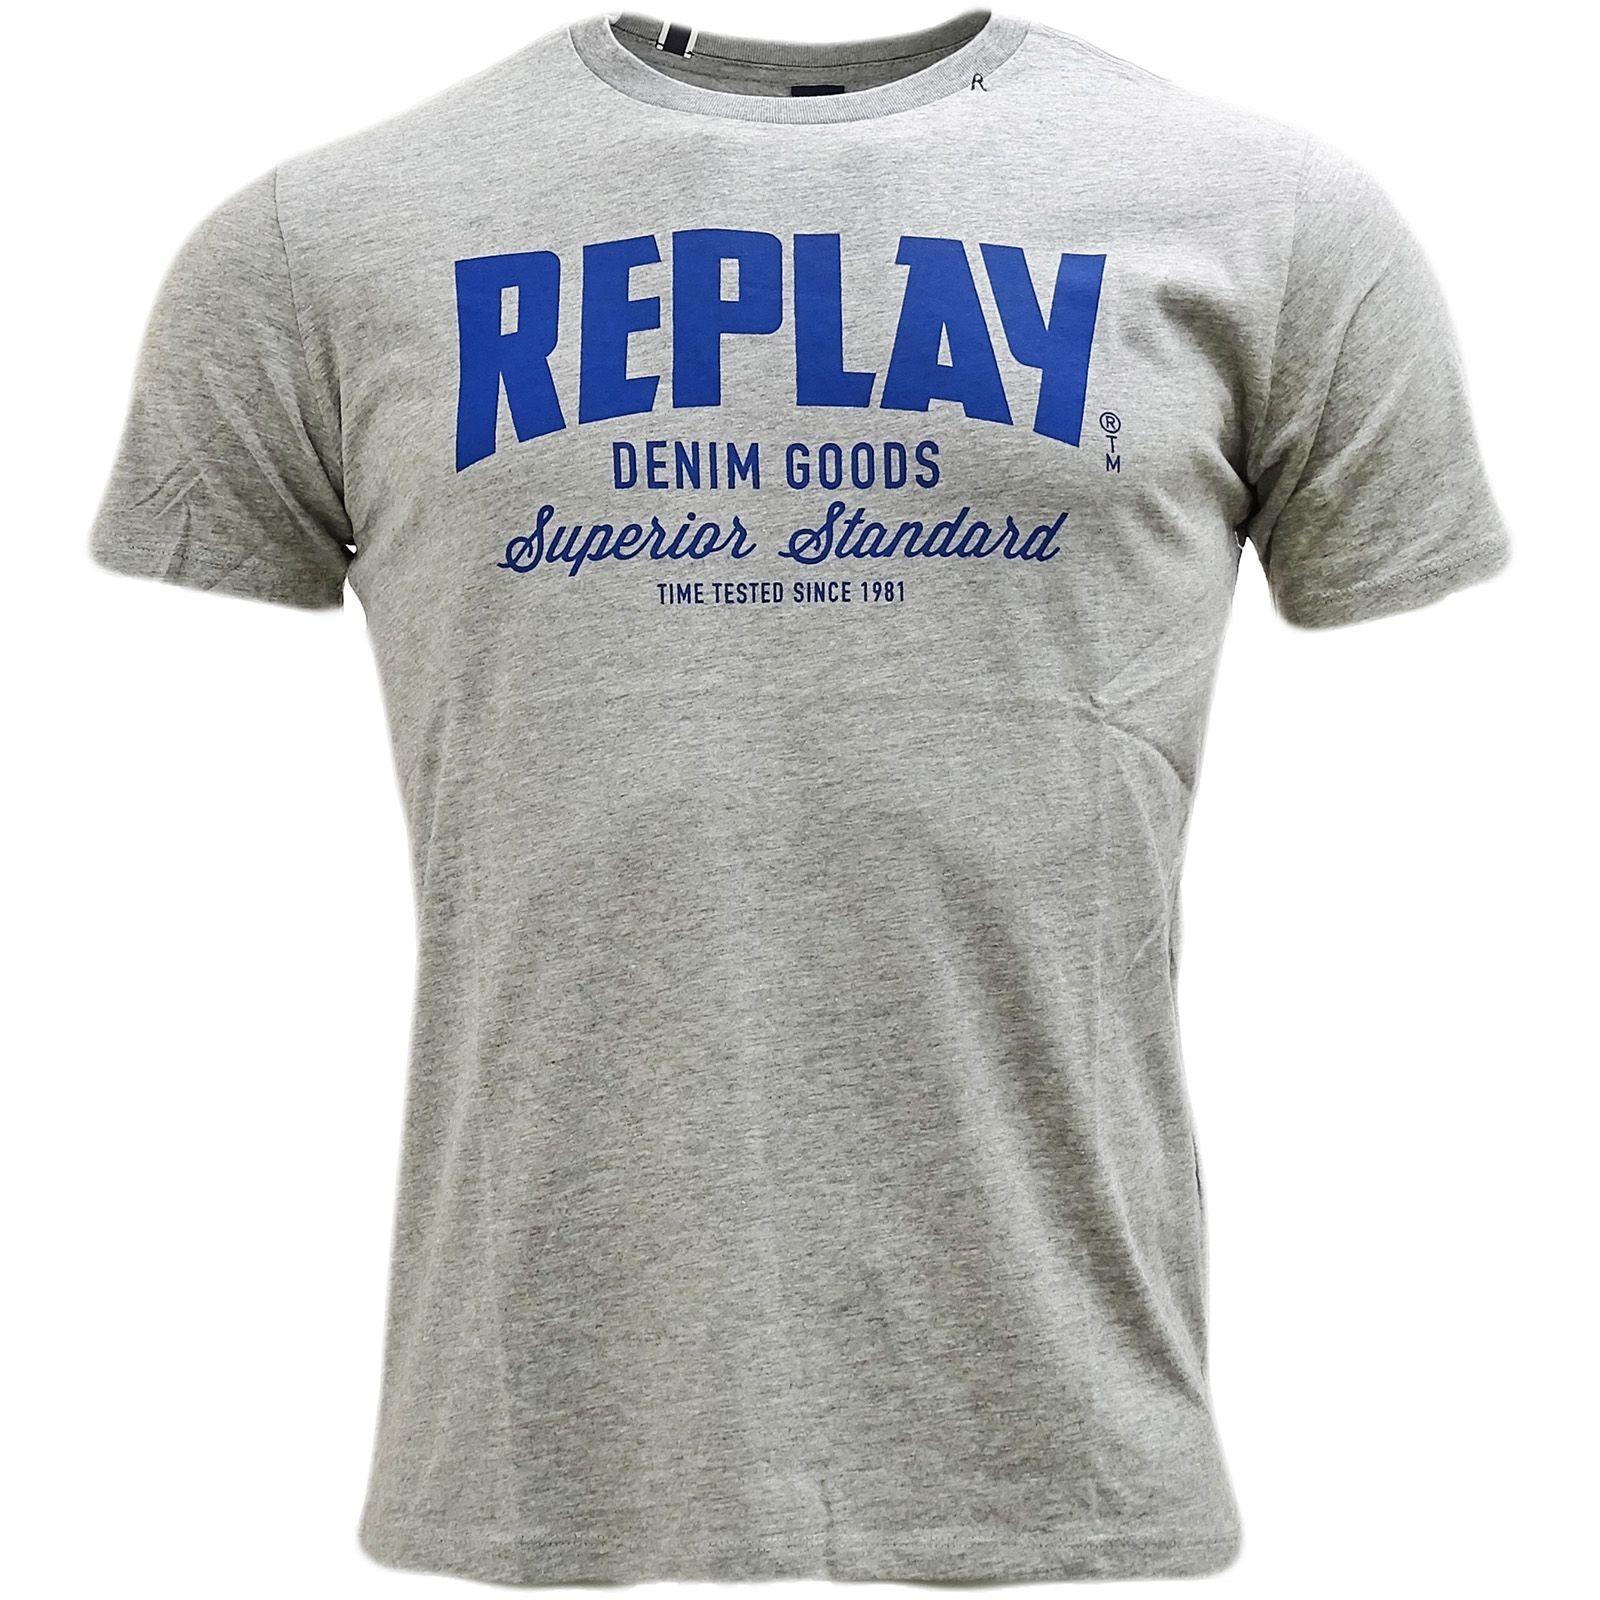 Replay Logo - Replay With 'Replay Logo' T-Shirt - M3481 | eBay